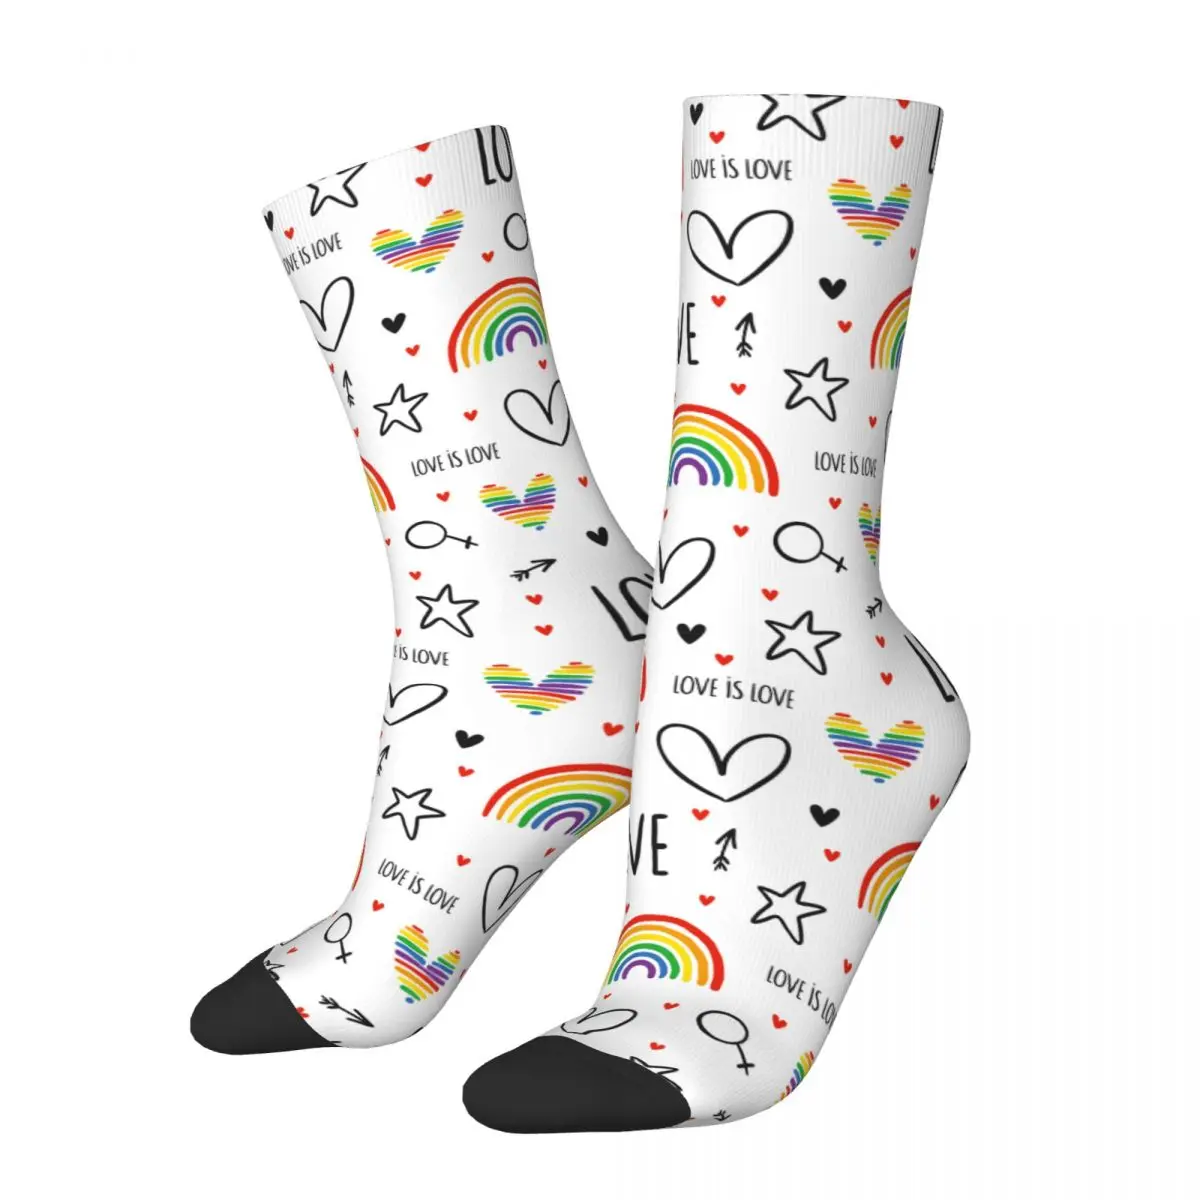 

All Season Socks Cute Lgbt Rainbow Hearts Arrows And Stars Product for Men Women Sweat Absorbing Stockings Best Gift Idea